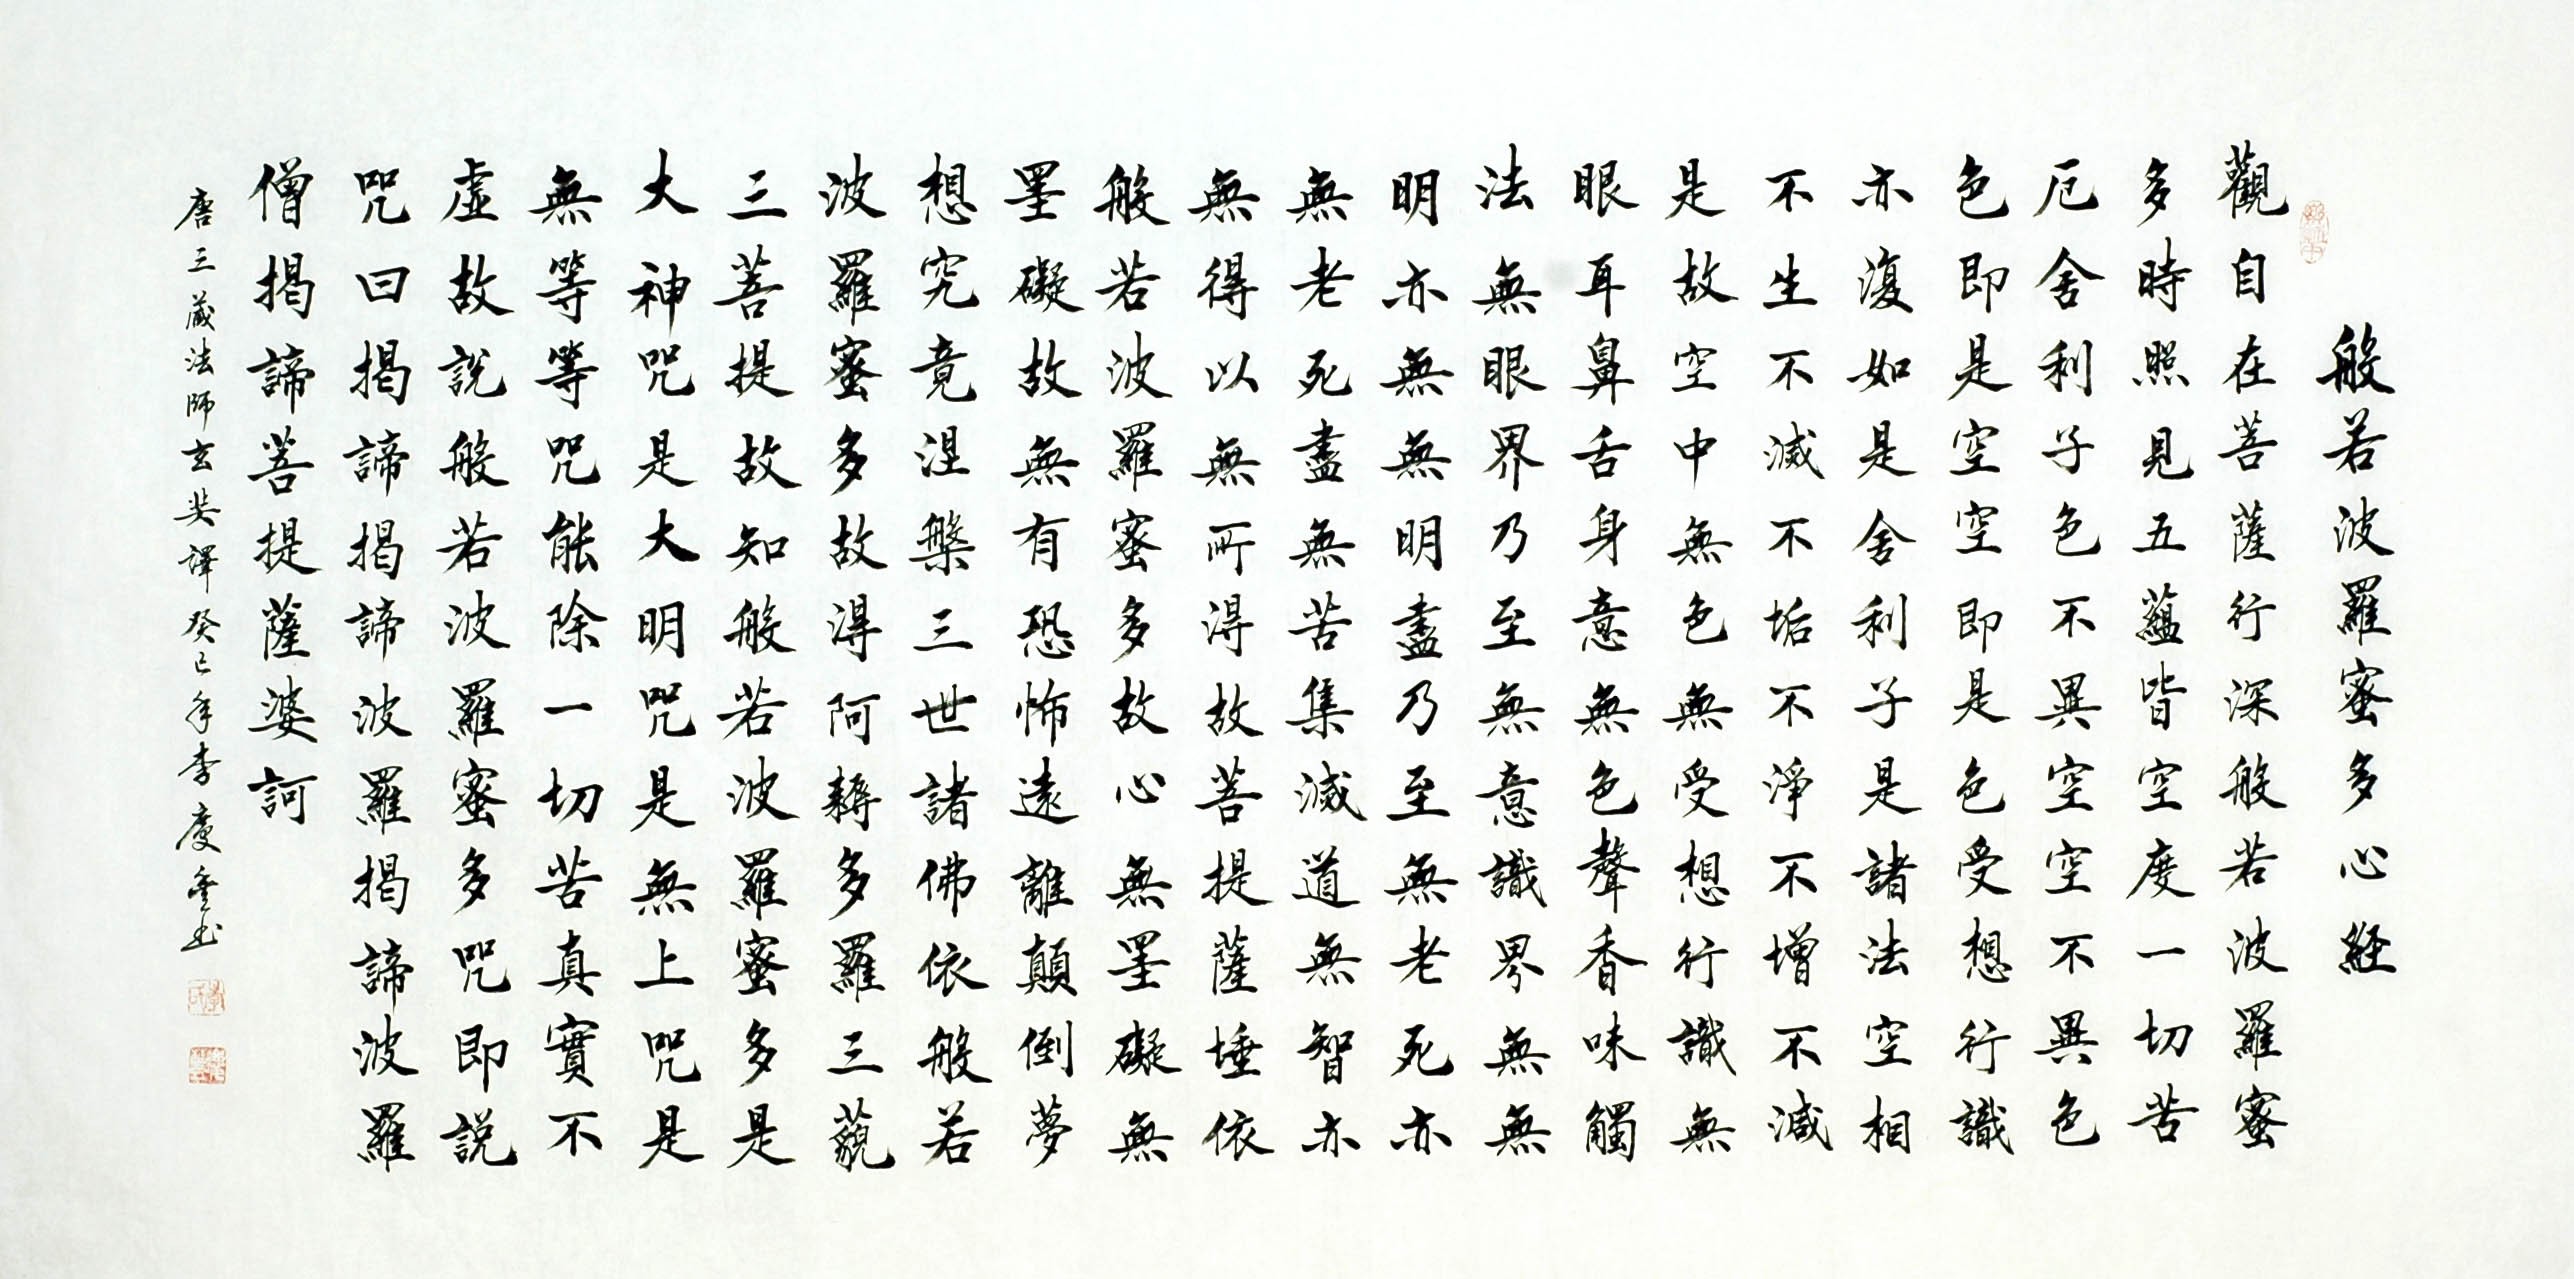 Chinese Regular Script Painting - CNAG007173